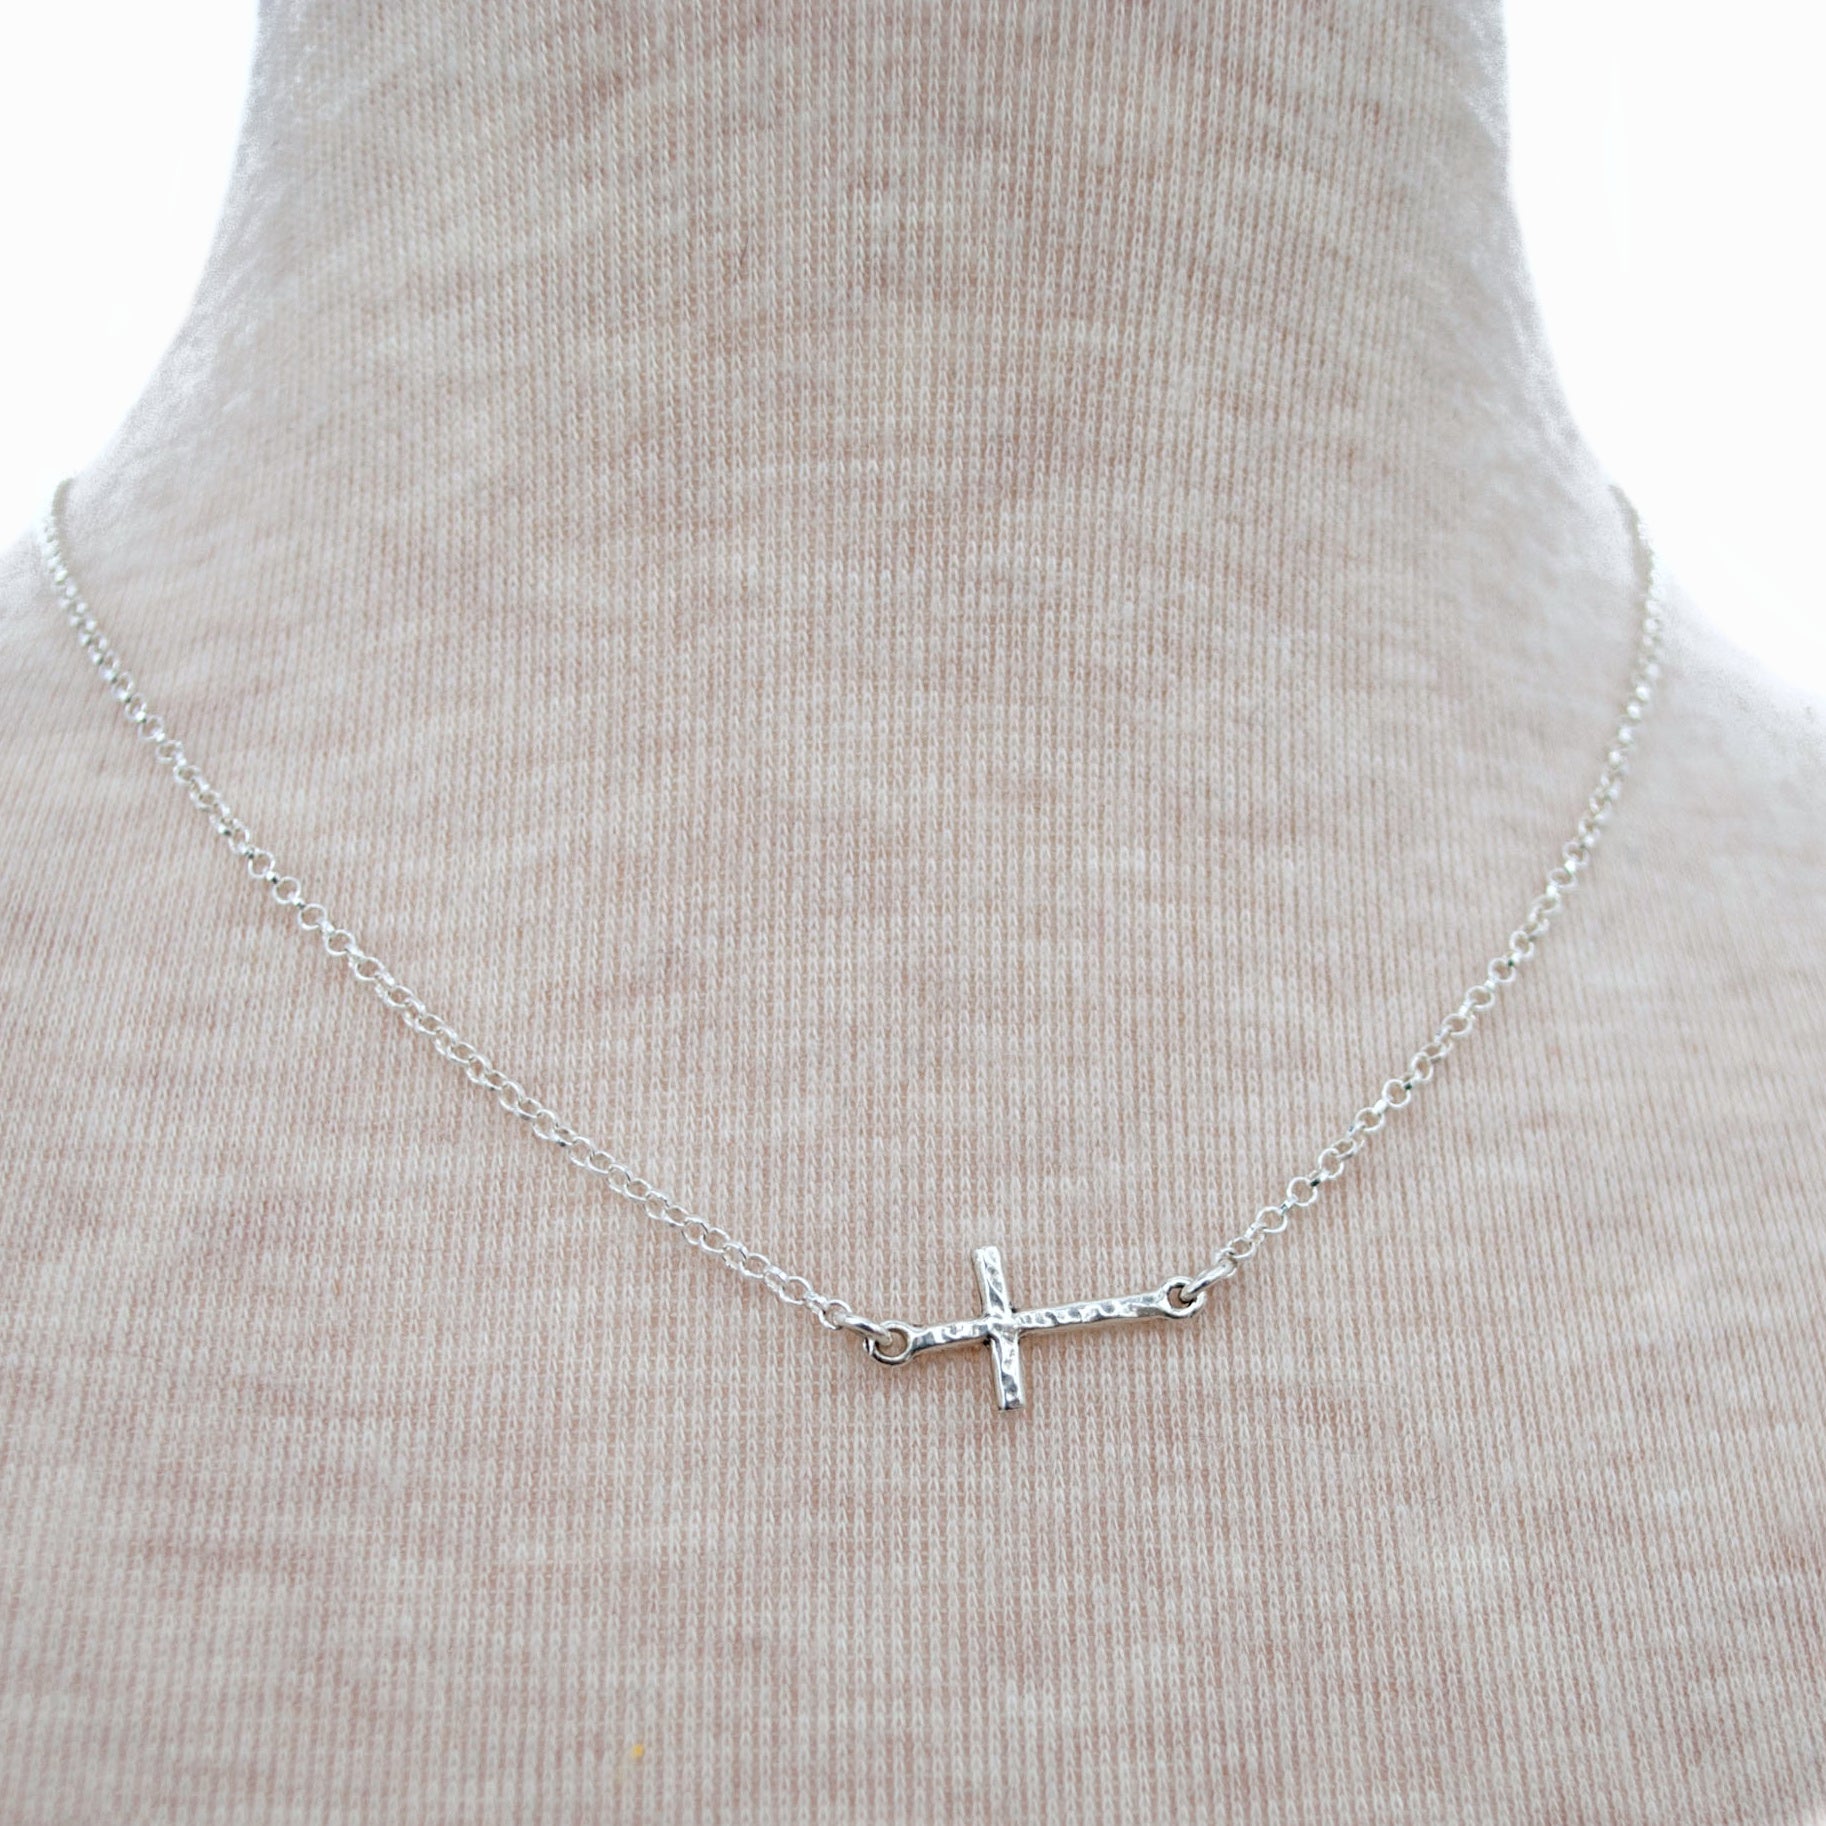 14K White Gold Sideways CROSS Necklace, Station Diamond Pendant, Religious  Christian Jewelry Gift